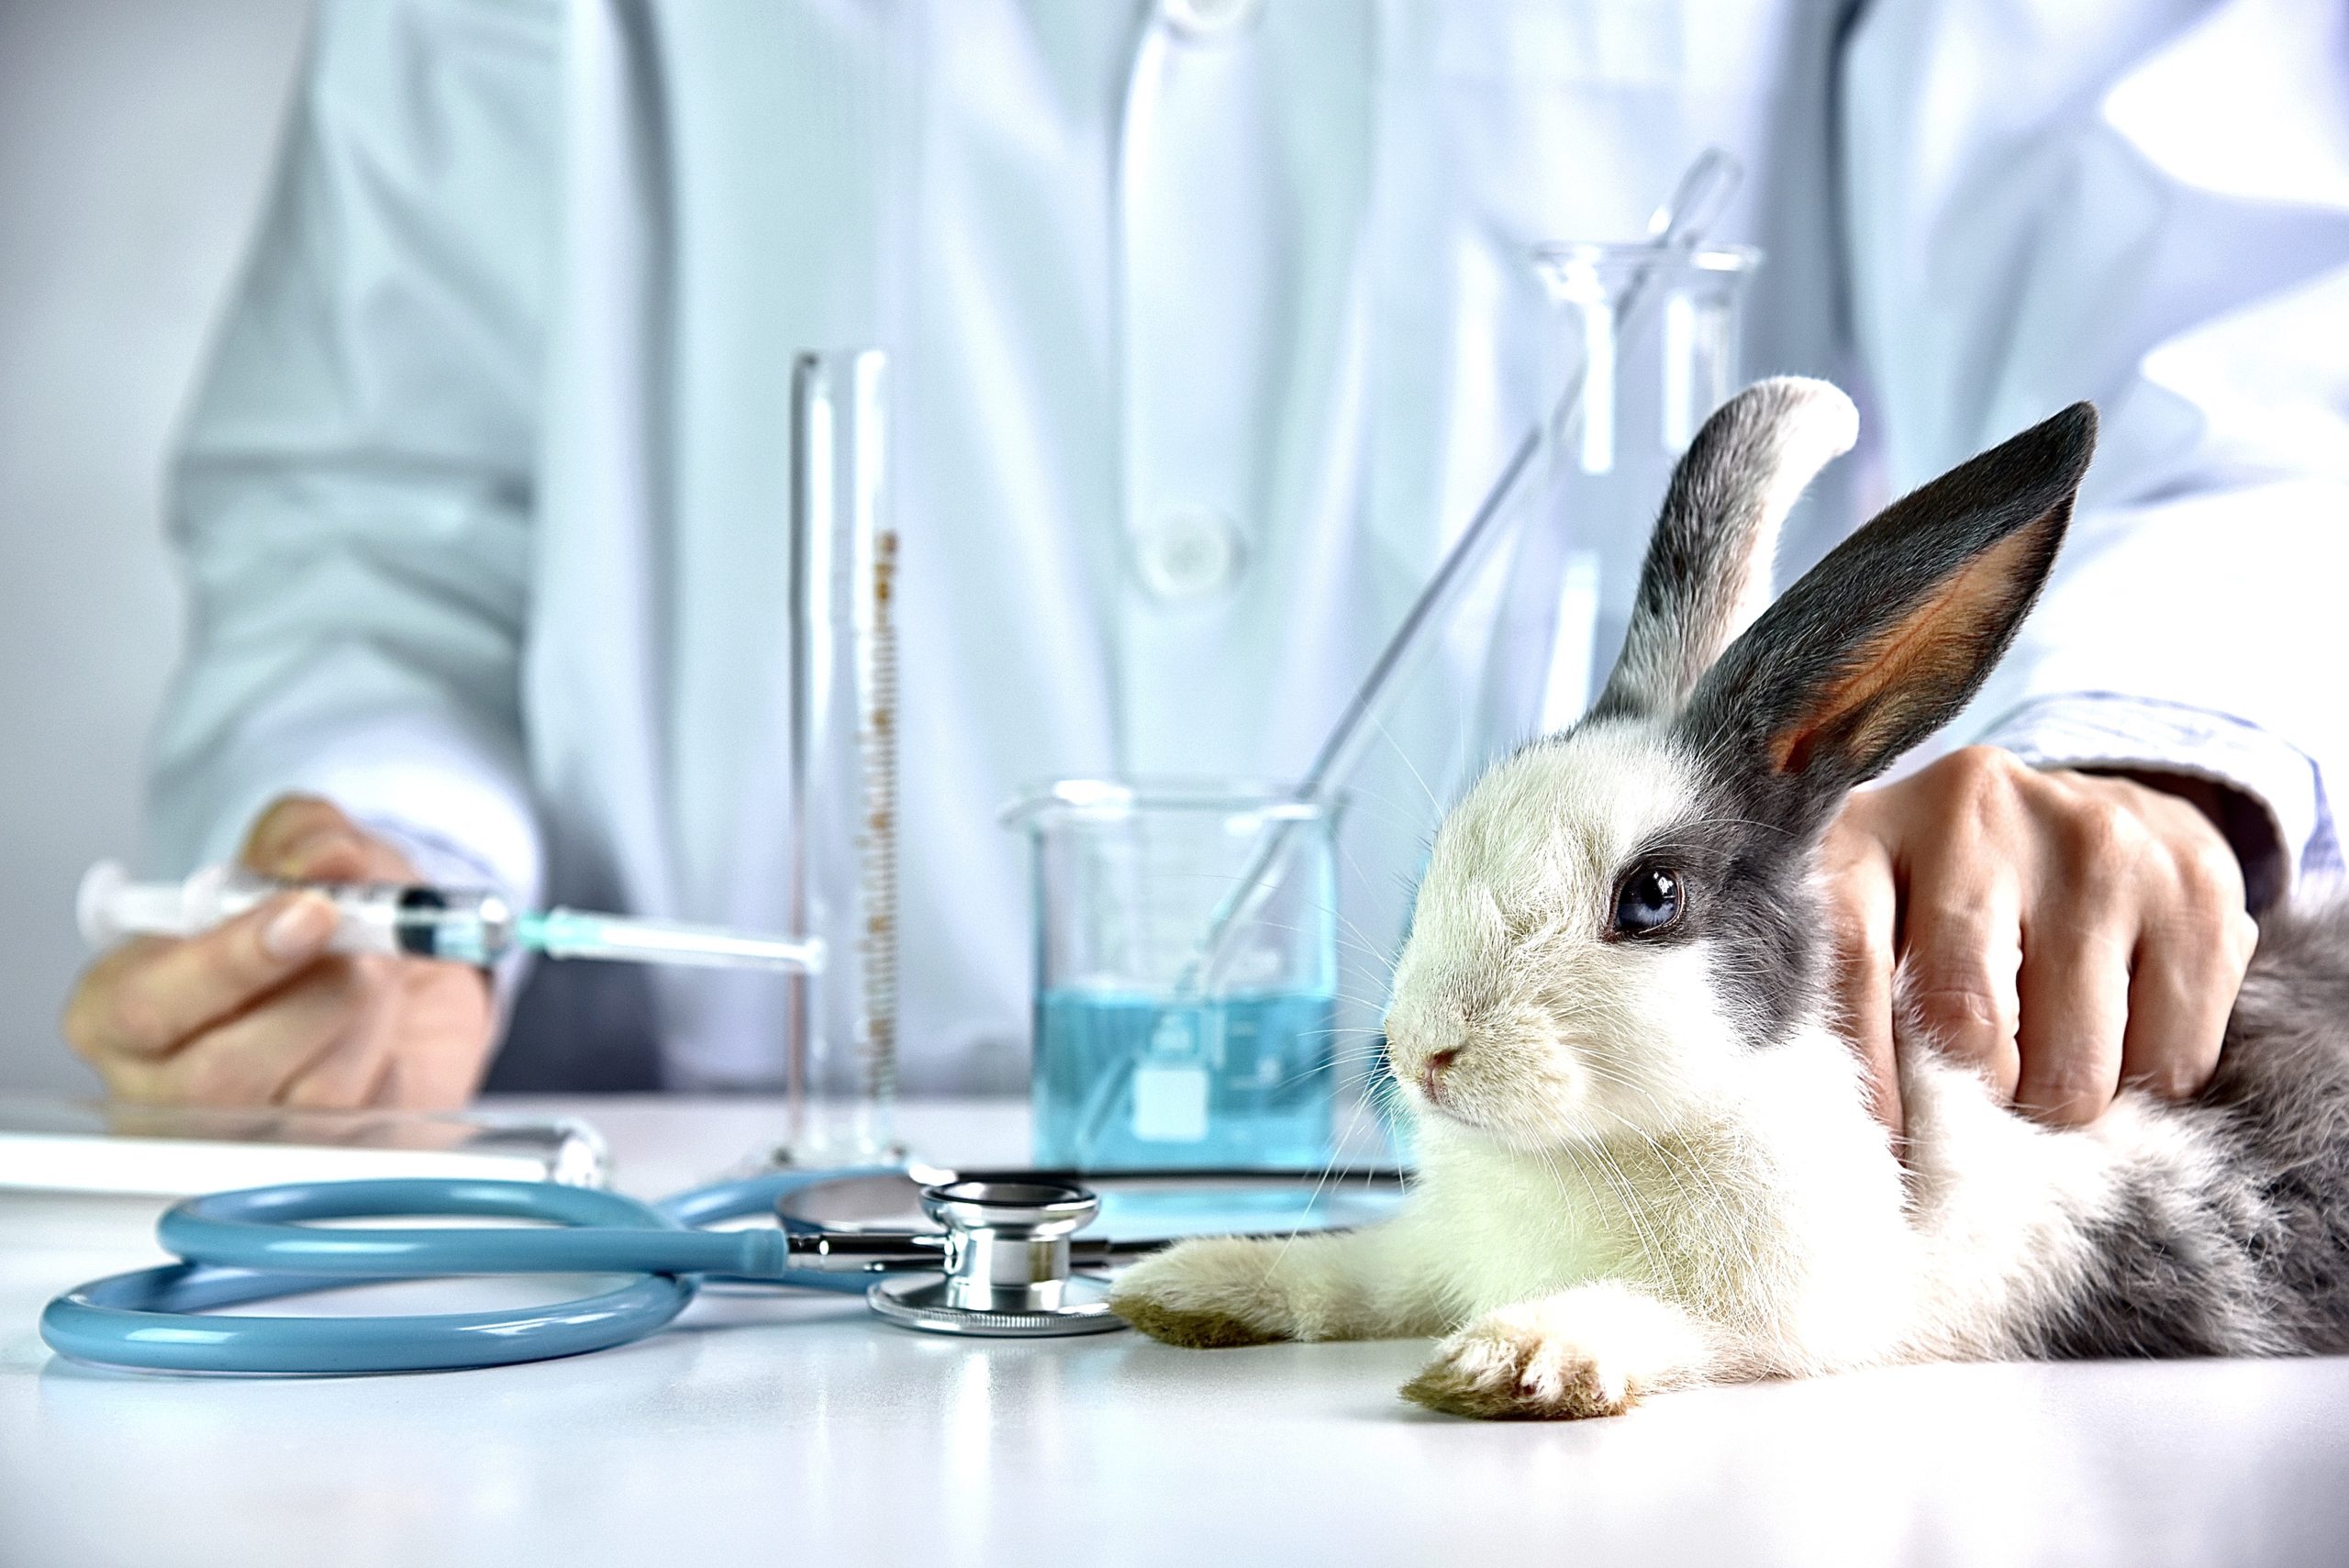 animal testing on rabbit - World Animal News